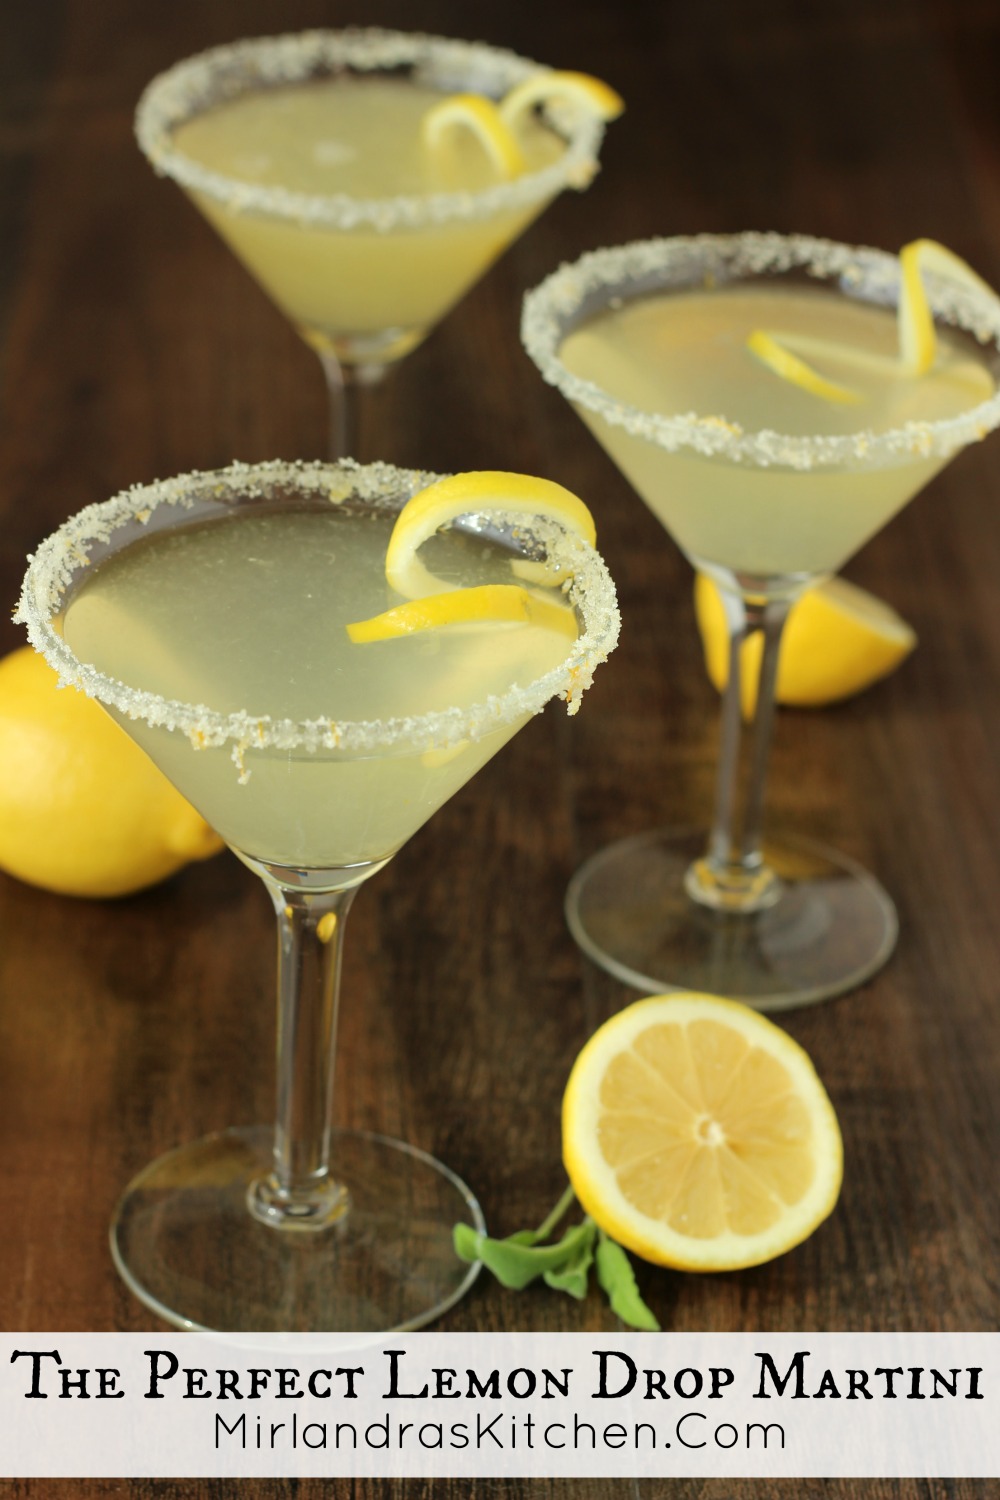 The Perfect Lemon Drop Martini - Mirlandra's Kitchen